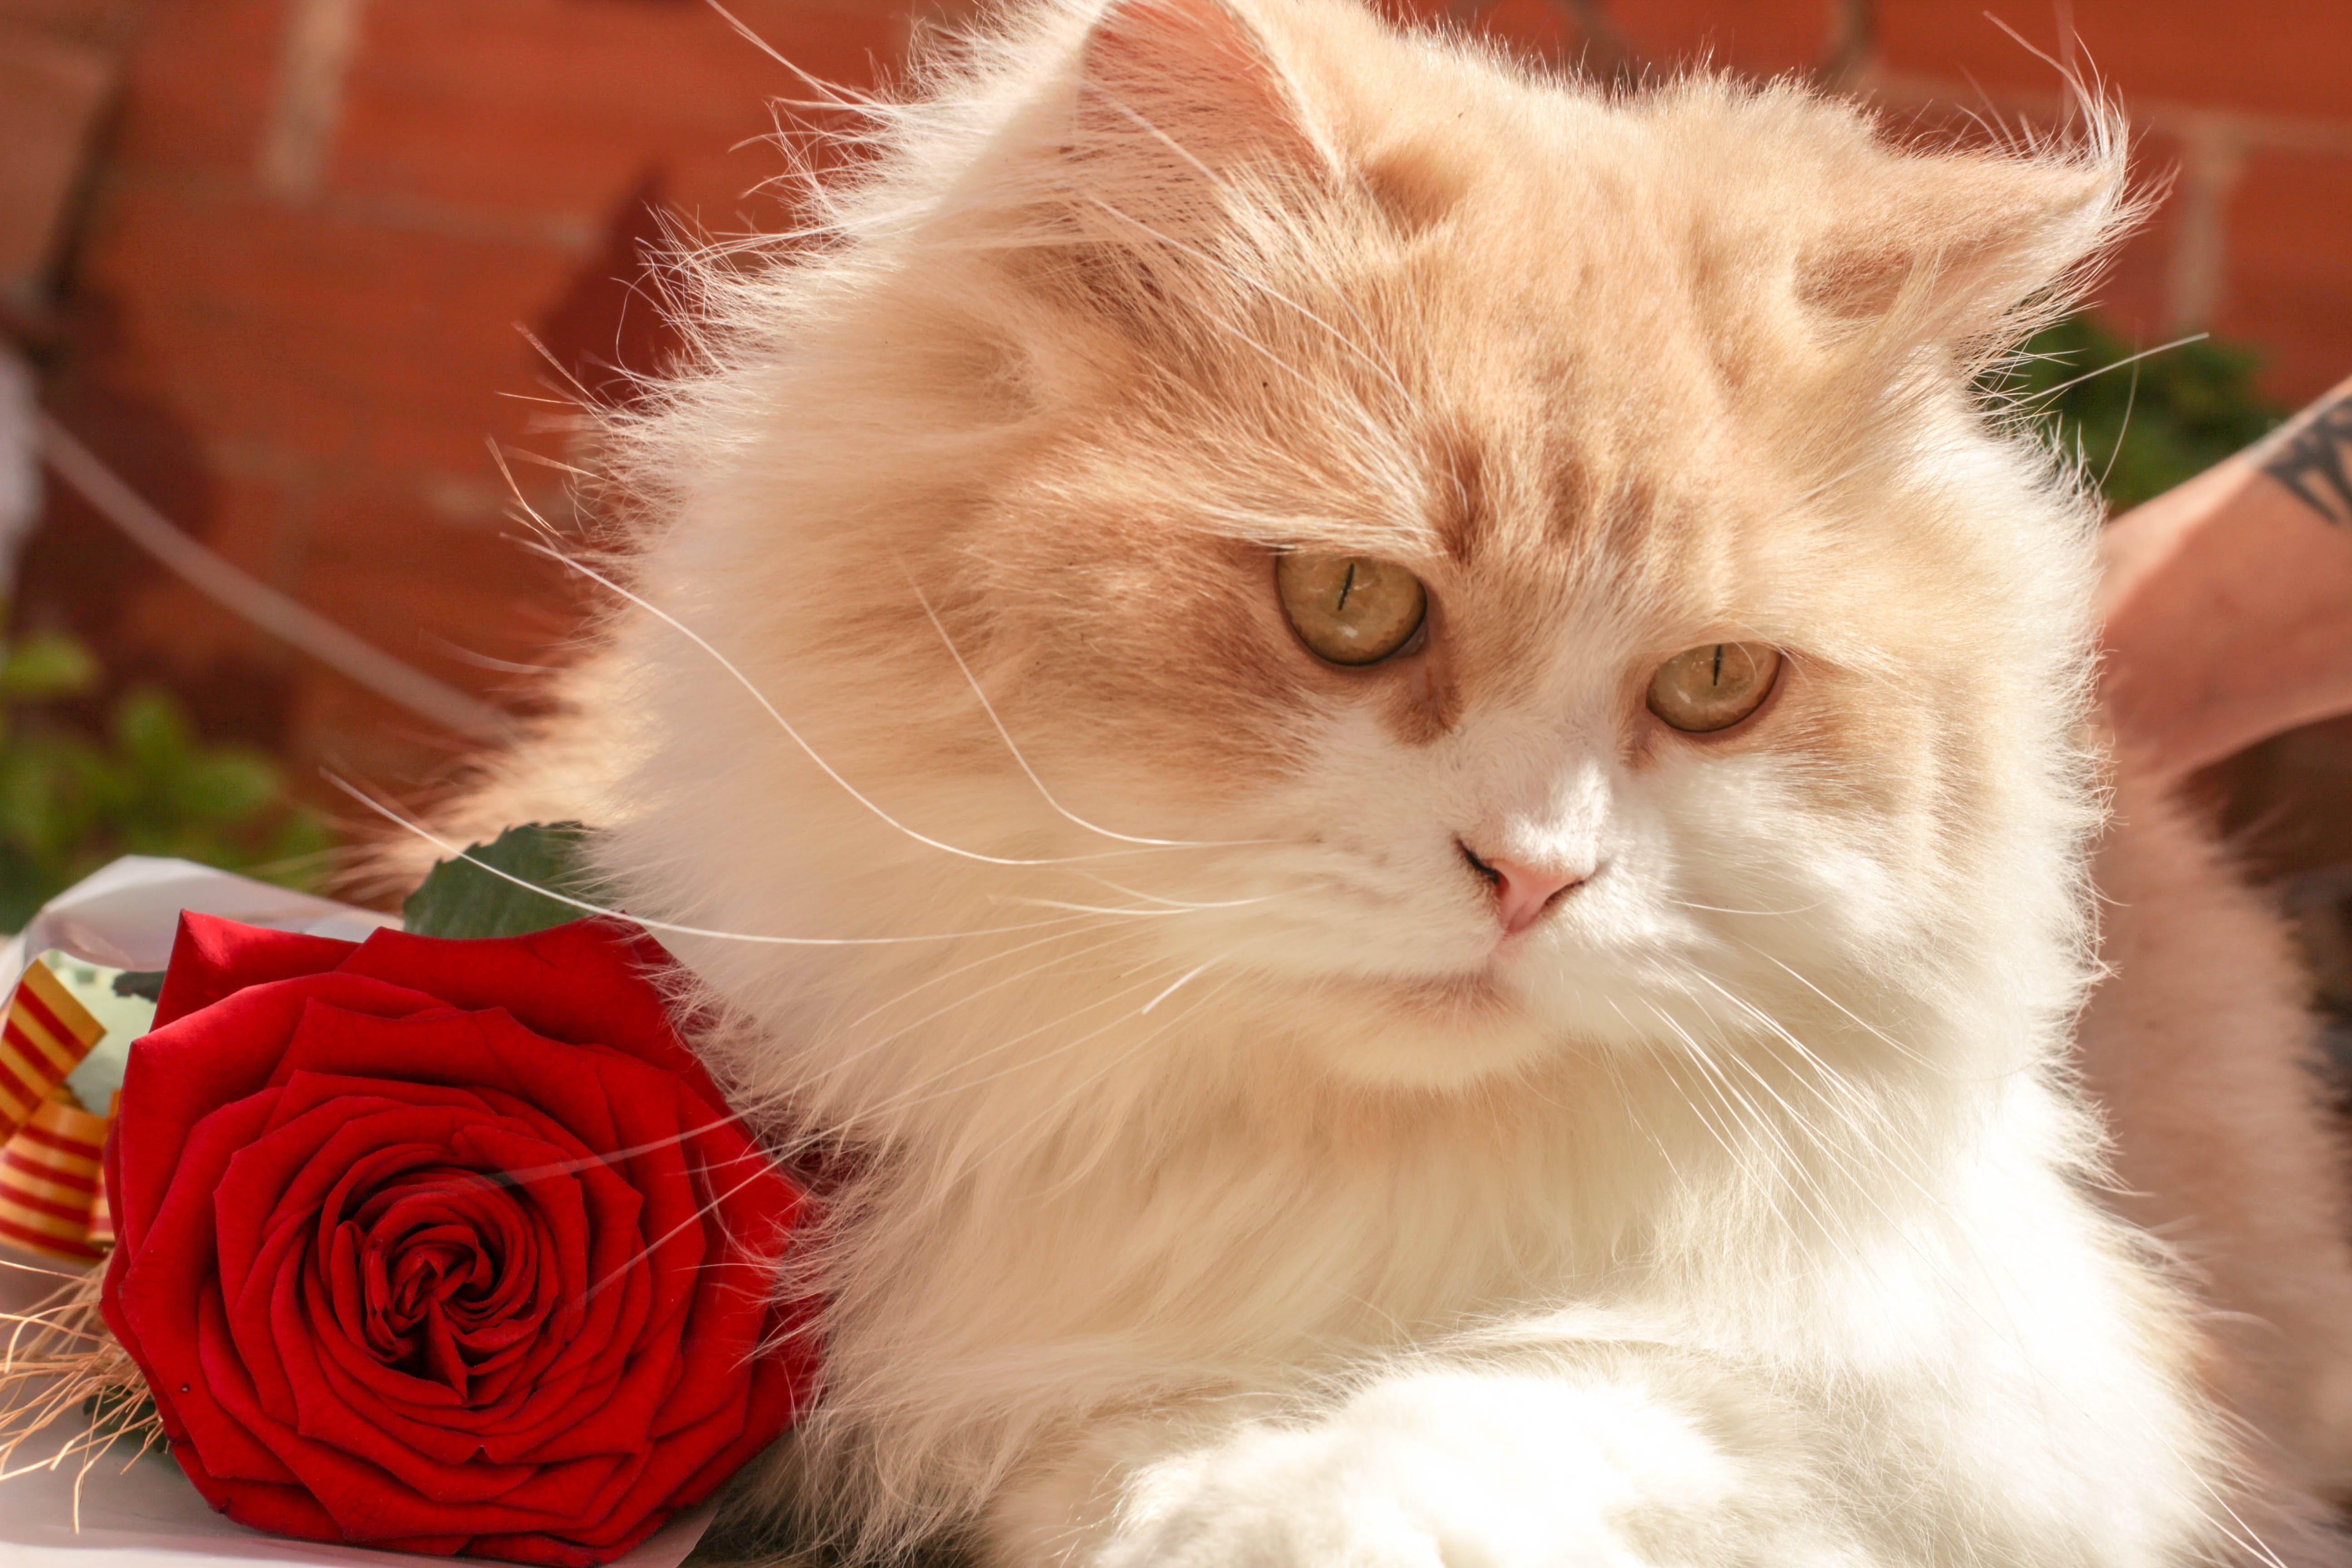 Котенок с цветами. Красивые котики. Красивые кошки. Красивый кот. Красивые открытки с кошками